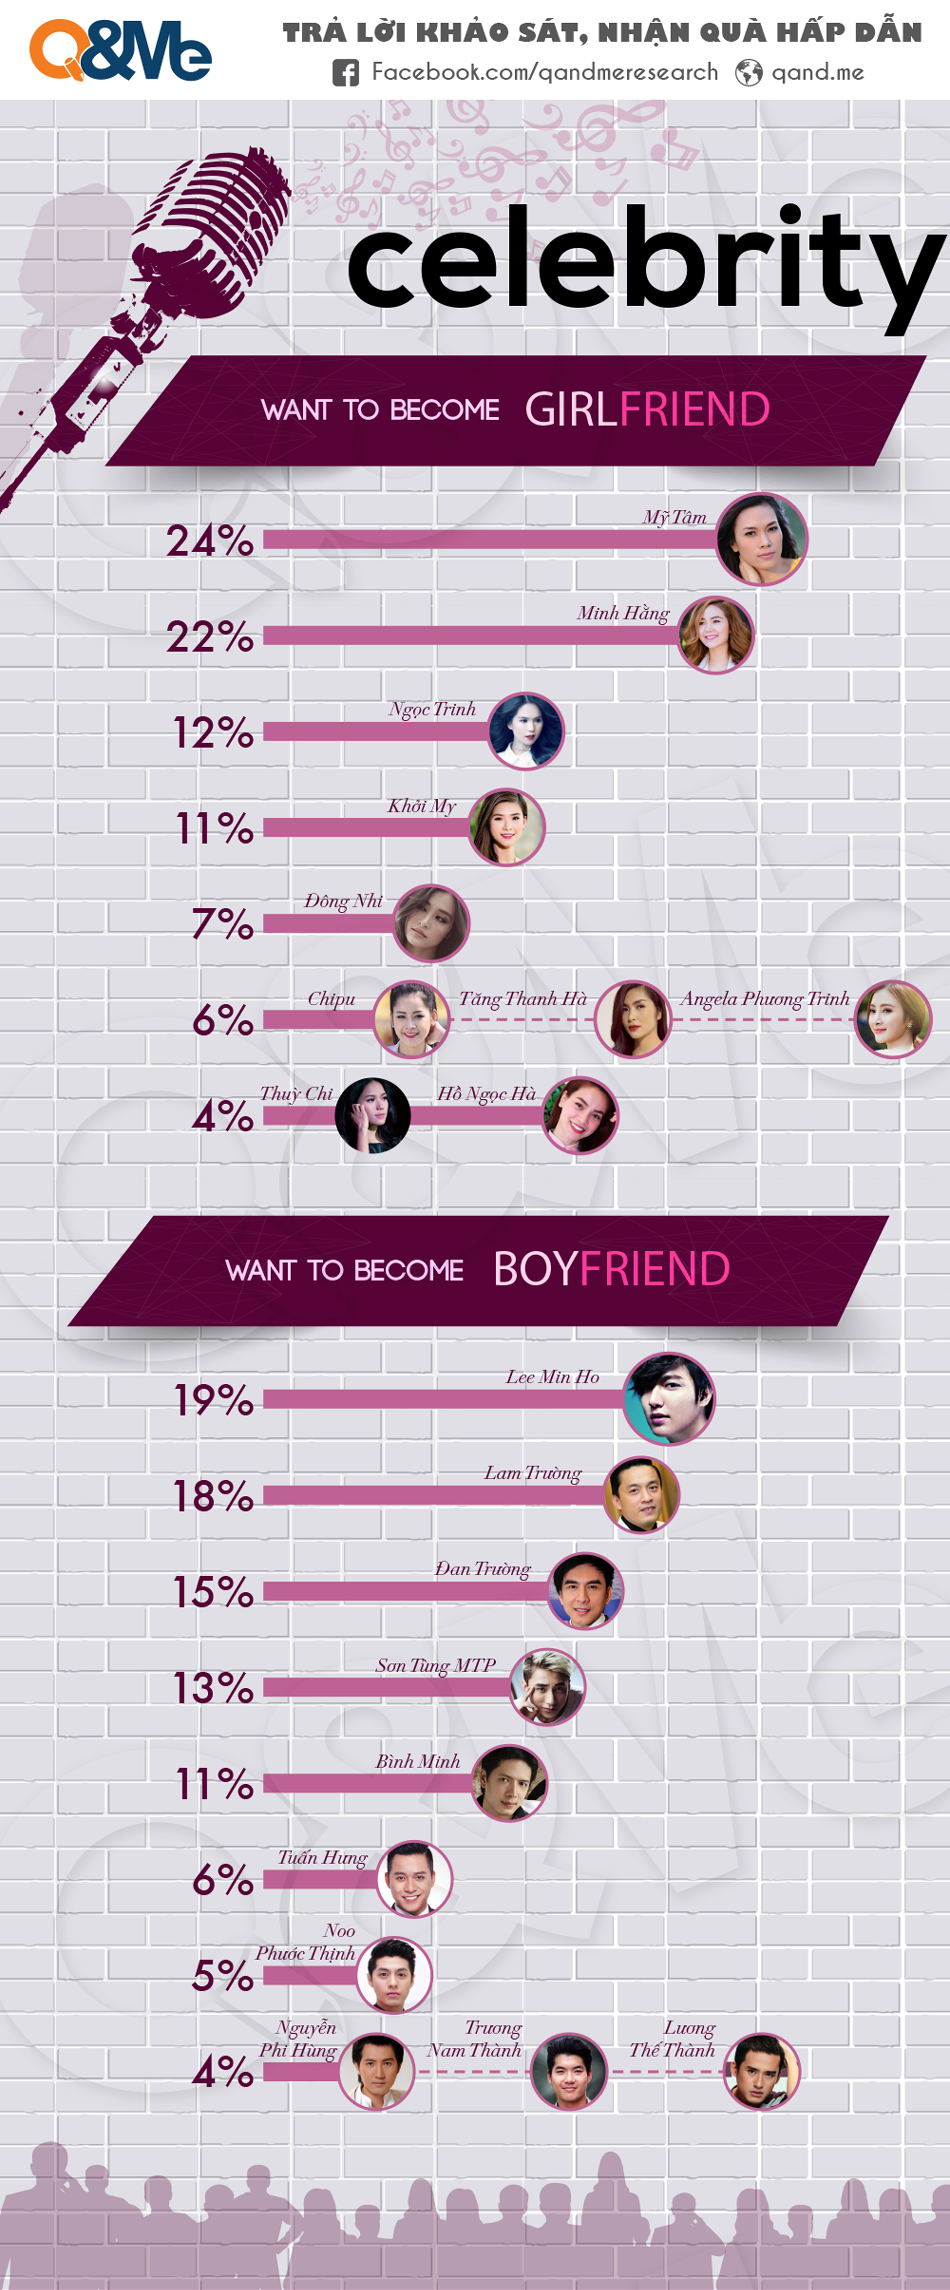 Celebrities for boyfriend / girlfriend among Vietnamese